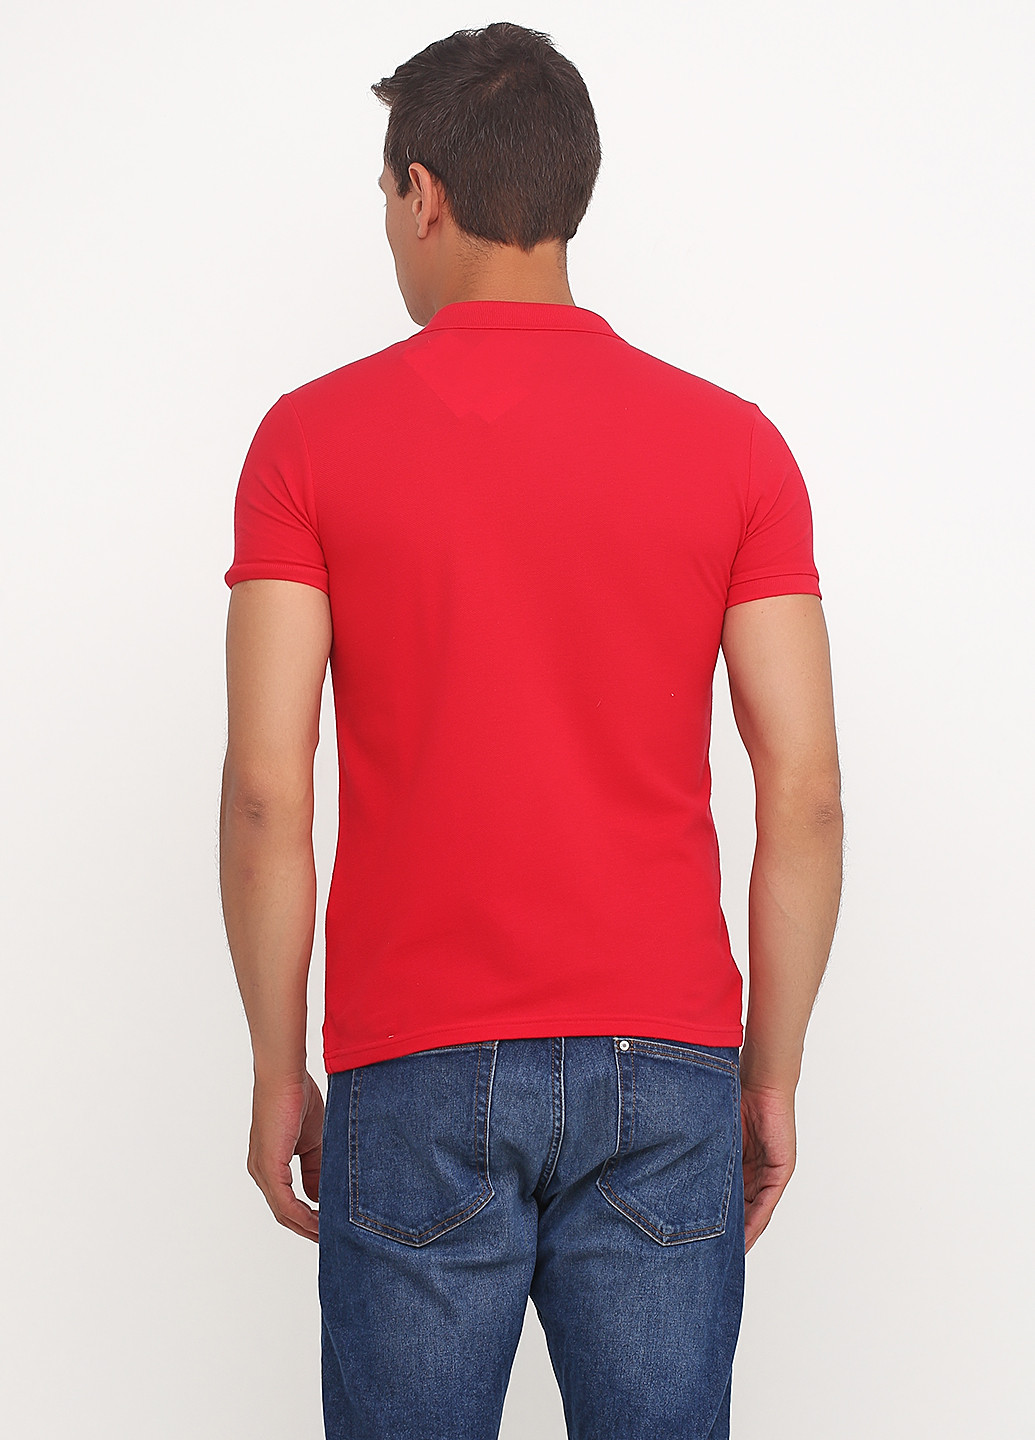 Красная футболка-поло для мужчин KOTON однотонная